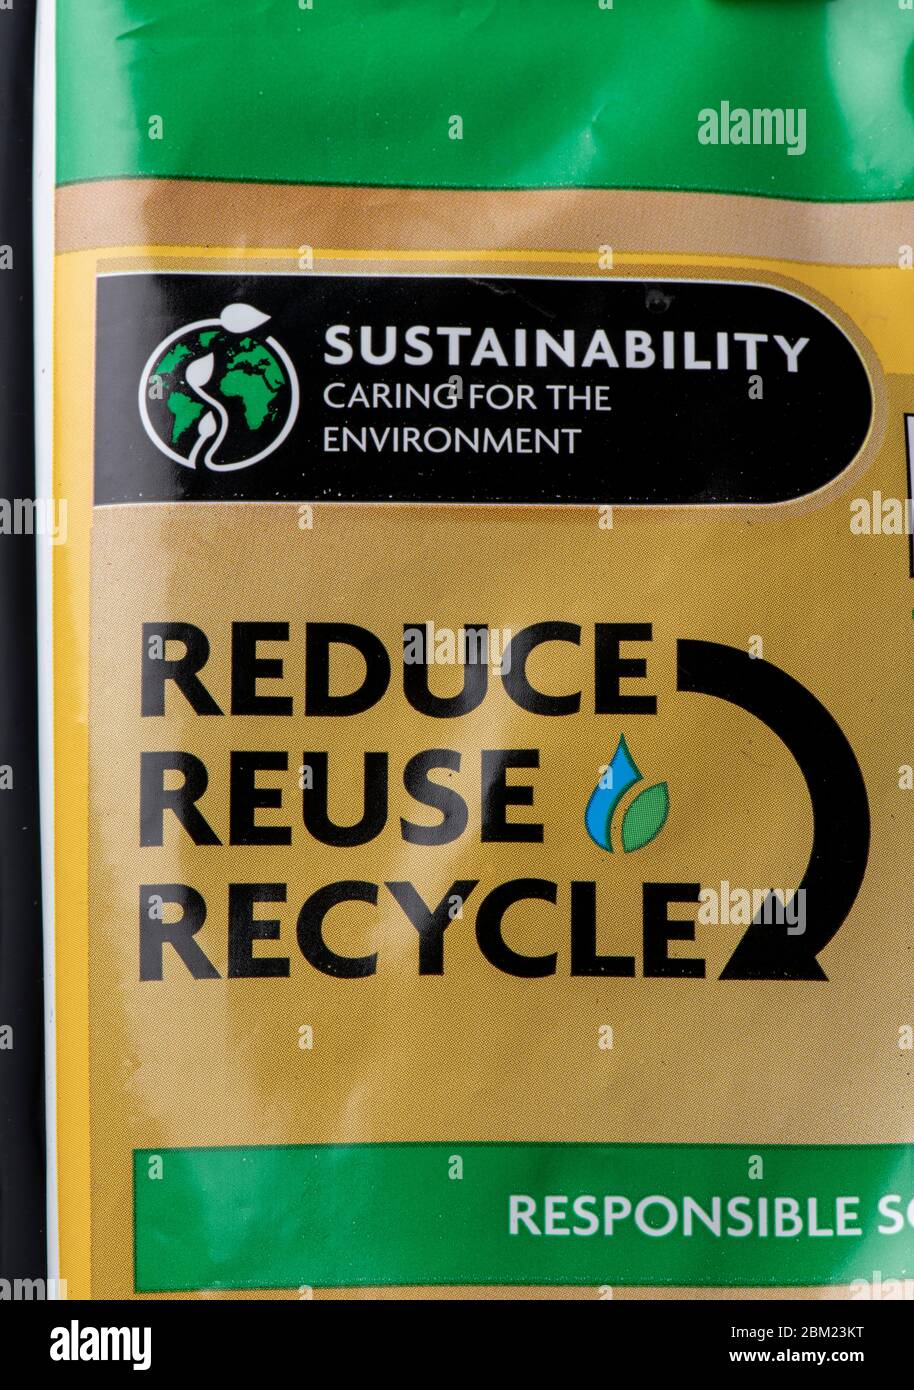 Reducir, reutilizar, reciclar el aviso en la bolsa de fertilizante Foto de stock